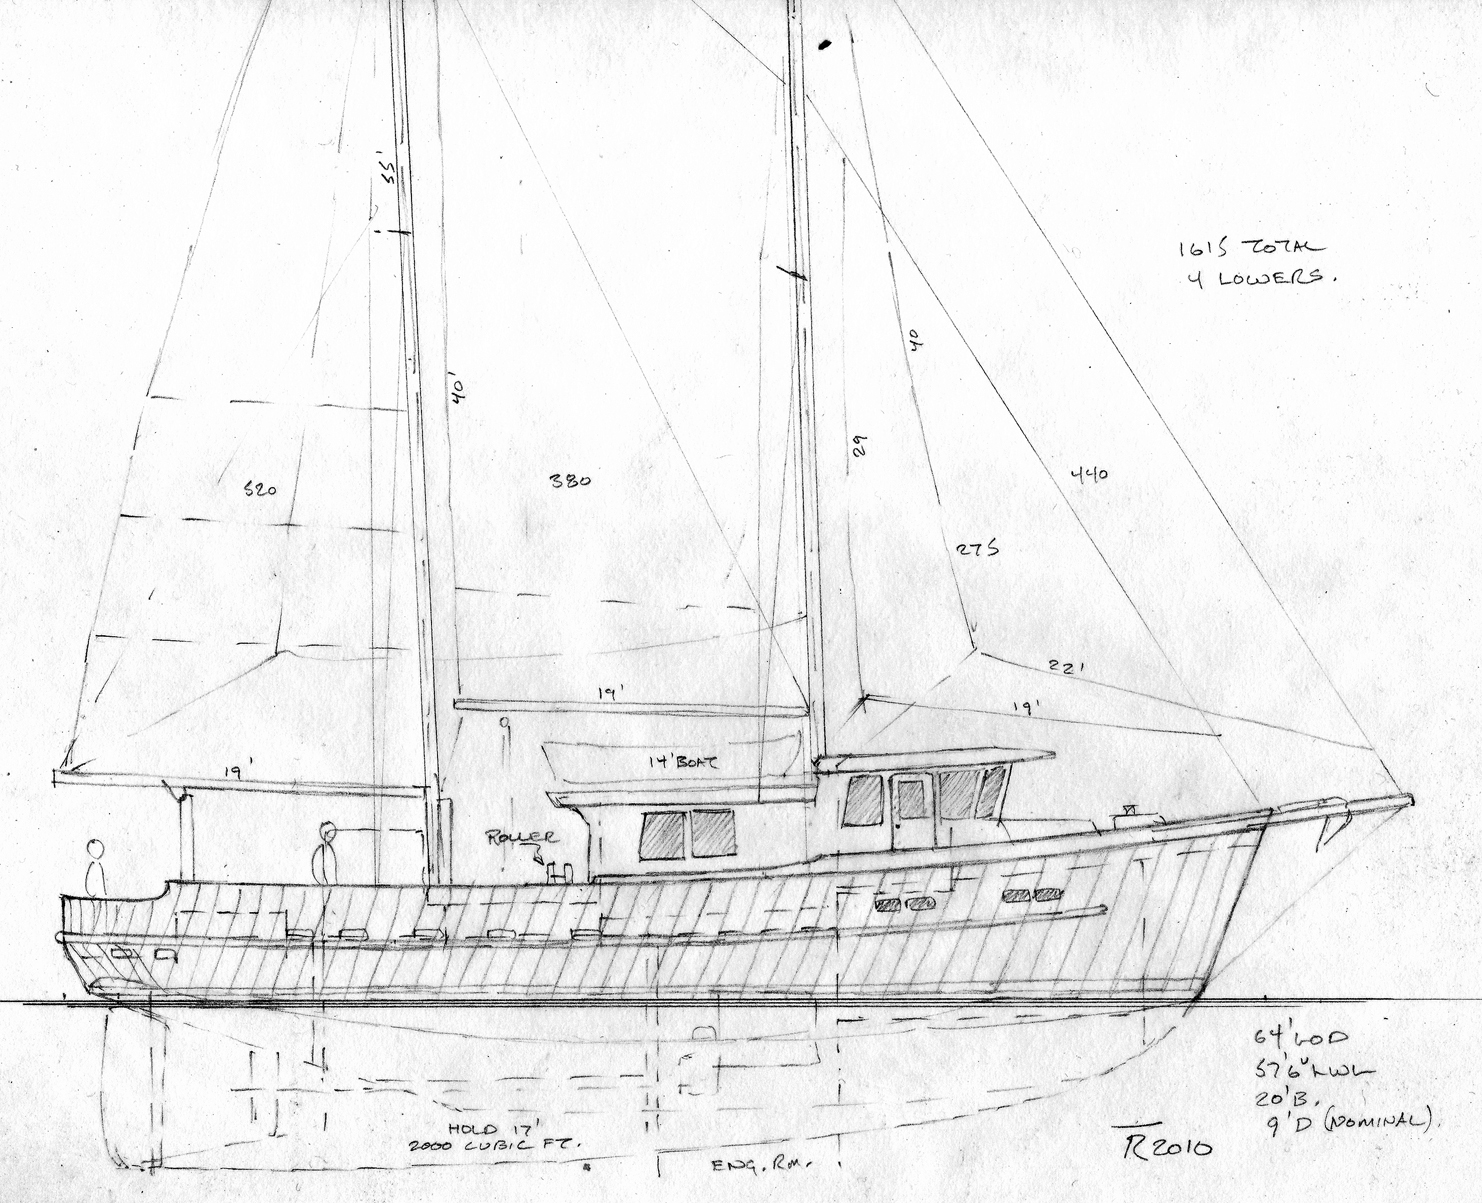 64' troller fishing schooner ~ Sail Boat Designs by Tad Roberts